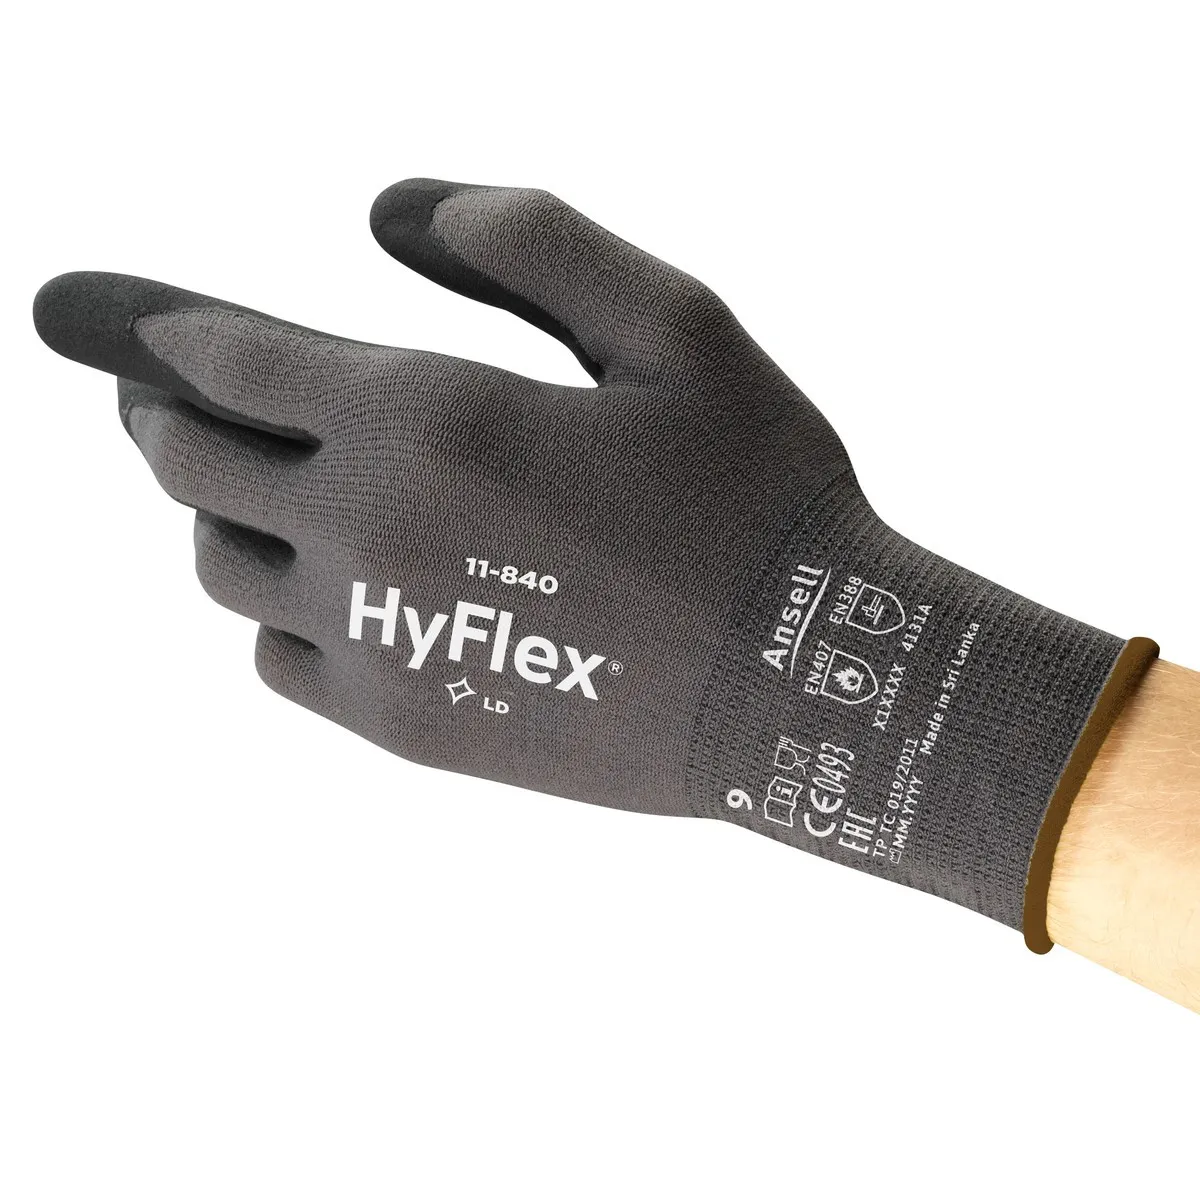 Zaštitne rukavice HYFLEX 11-840 sive - Ansell - PAR 